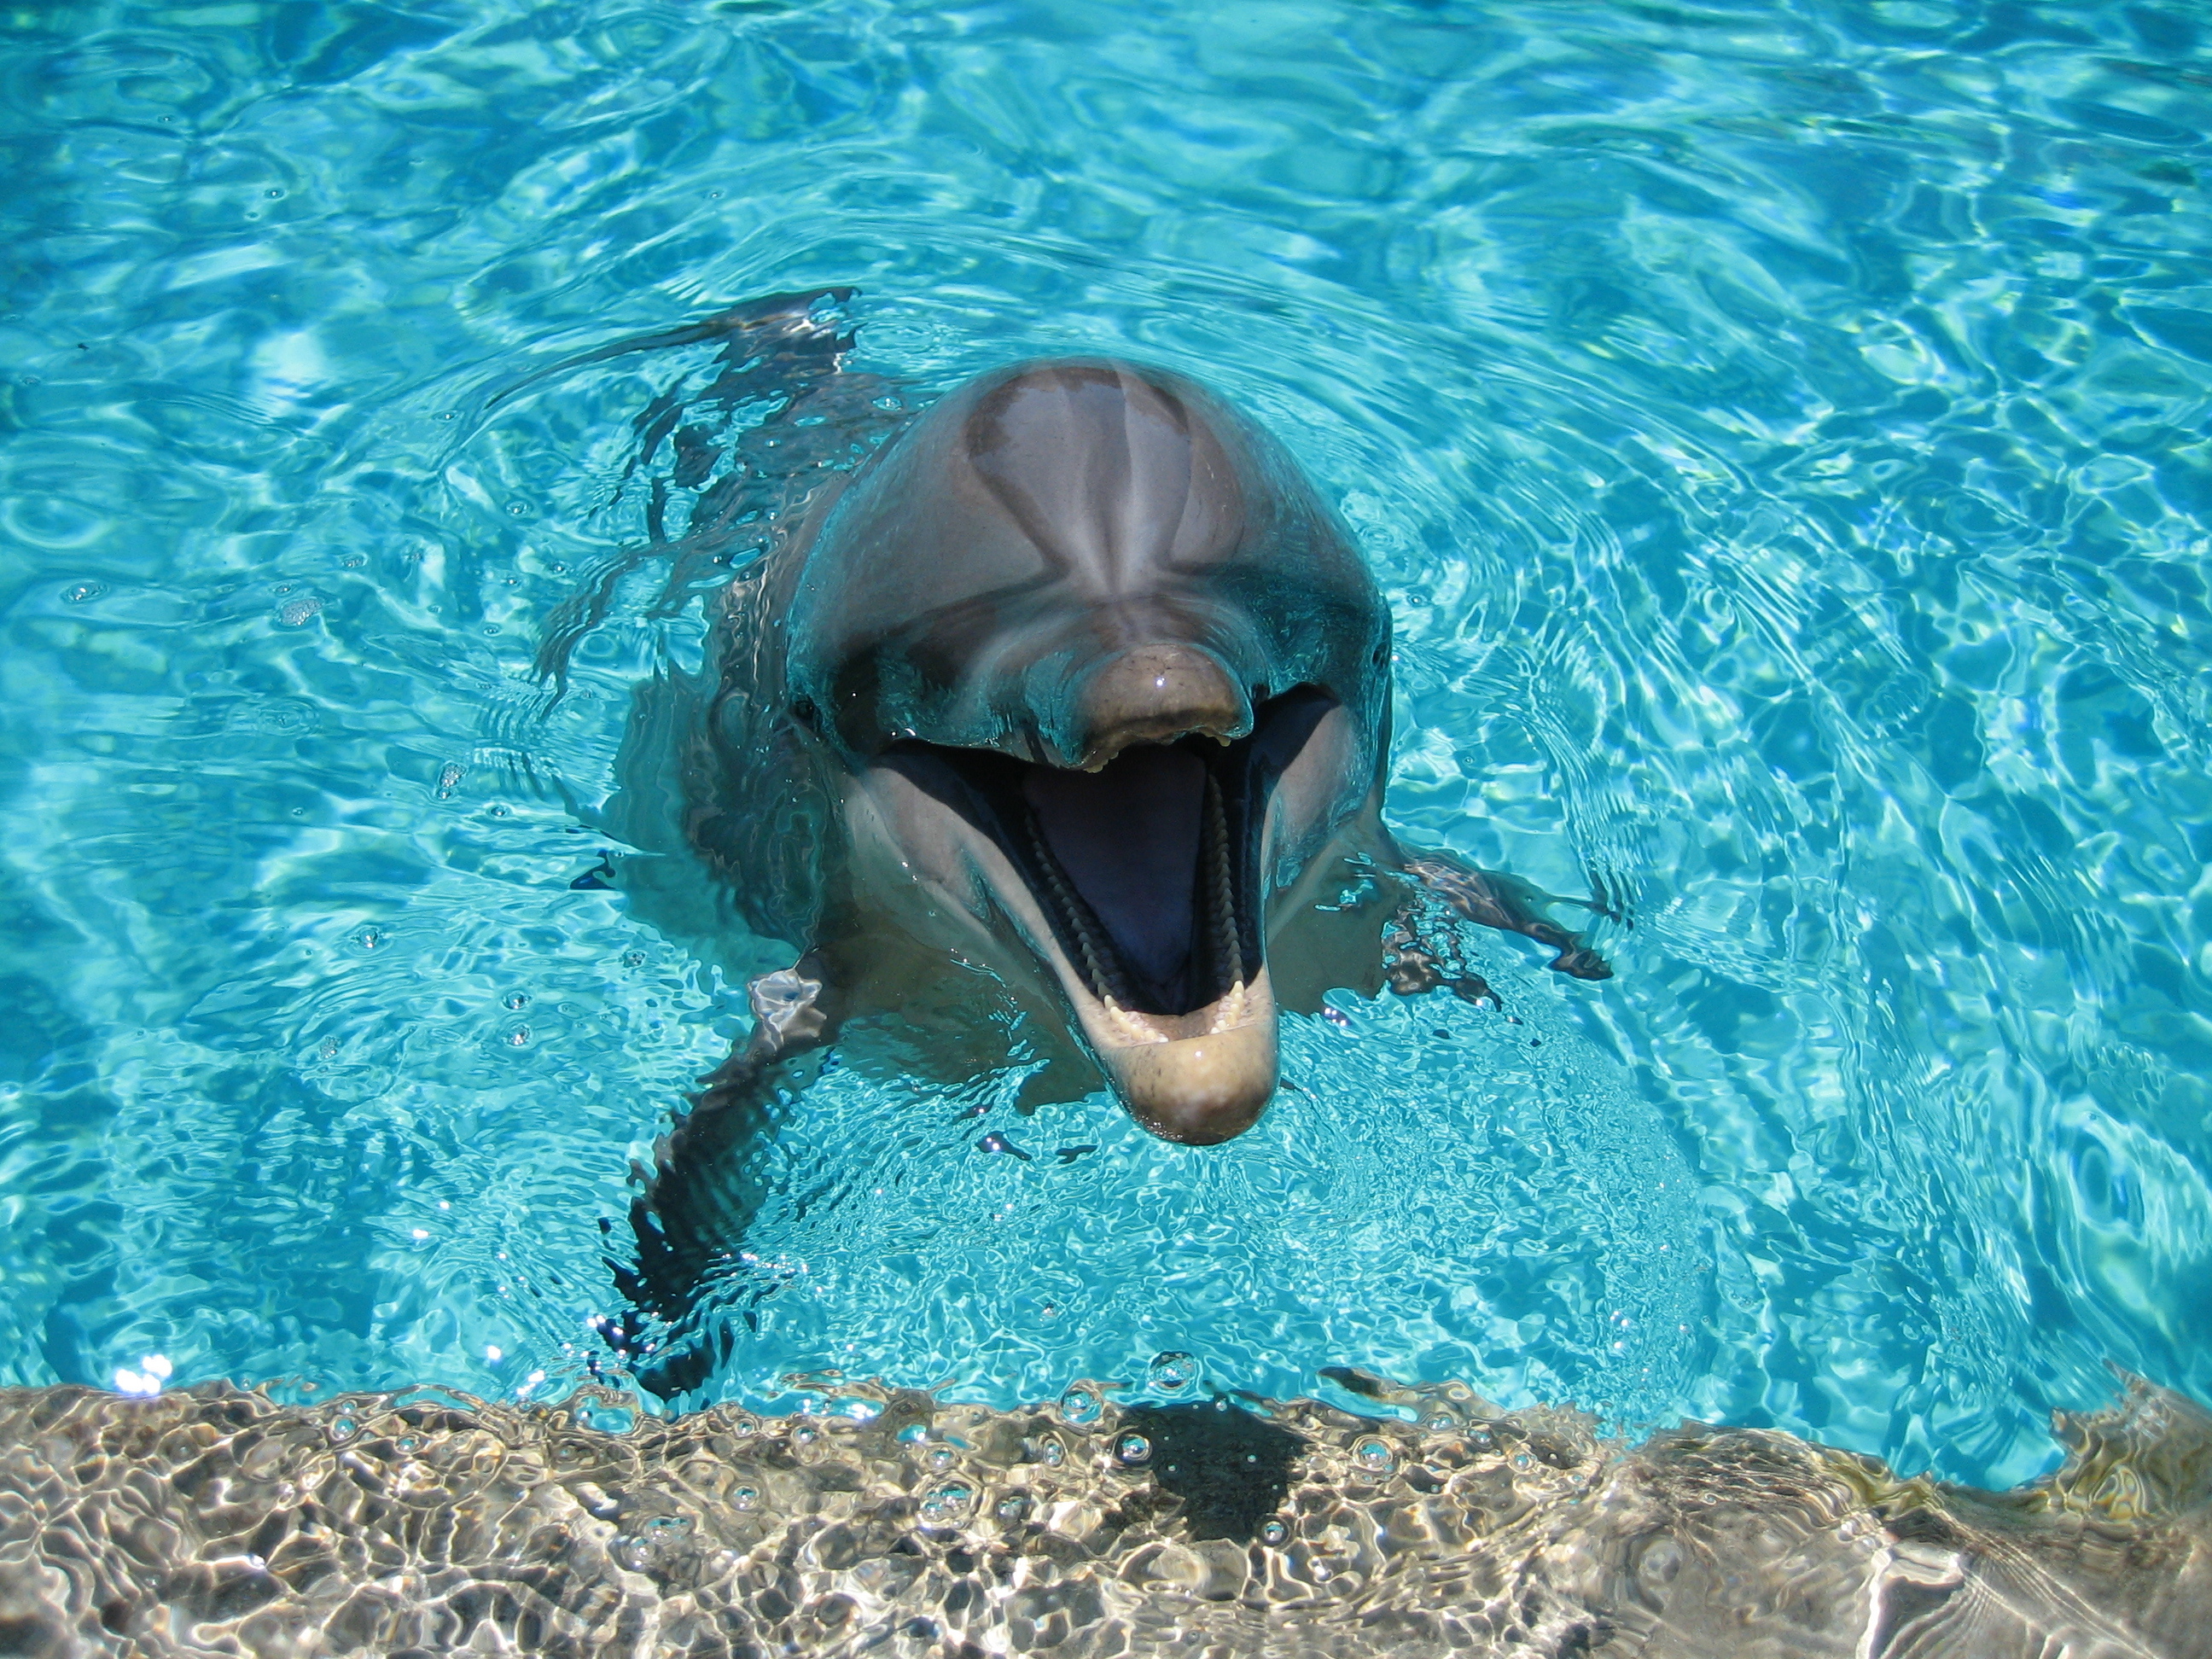 142199 descargar imagen animales, piscina, sonrisa, agua, sonreír, delfín: fondos de pantalla y protectores de pantalla gratis